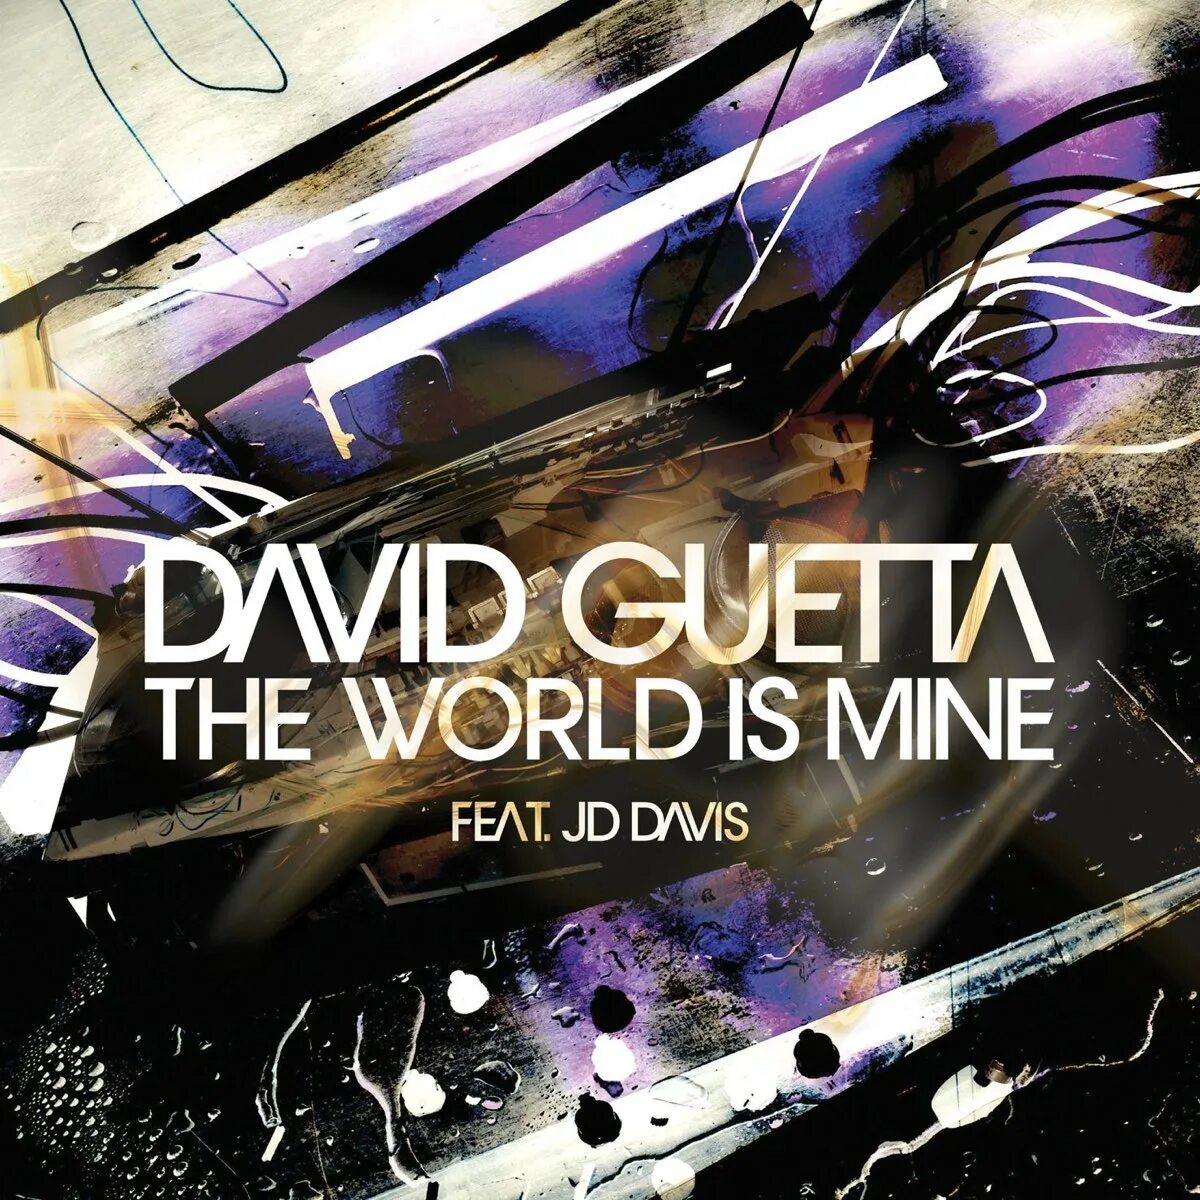 World is mind. David Guetta the World is mine. The World is mine обложка. David Guetta the World is mine обложка. Joachim Garraud, JD Davis, David Guetta the World is mine.